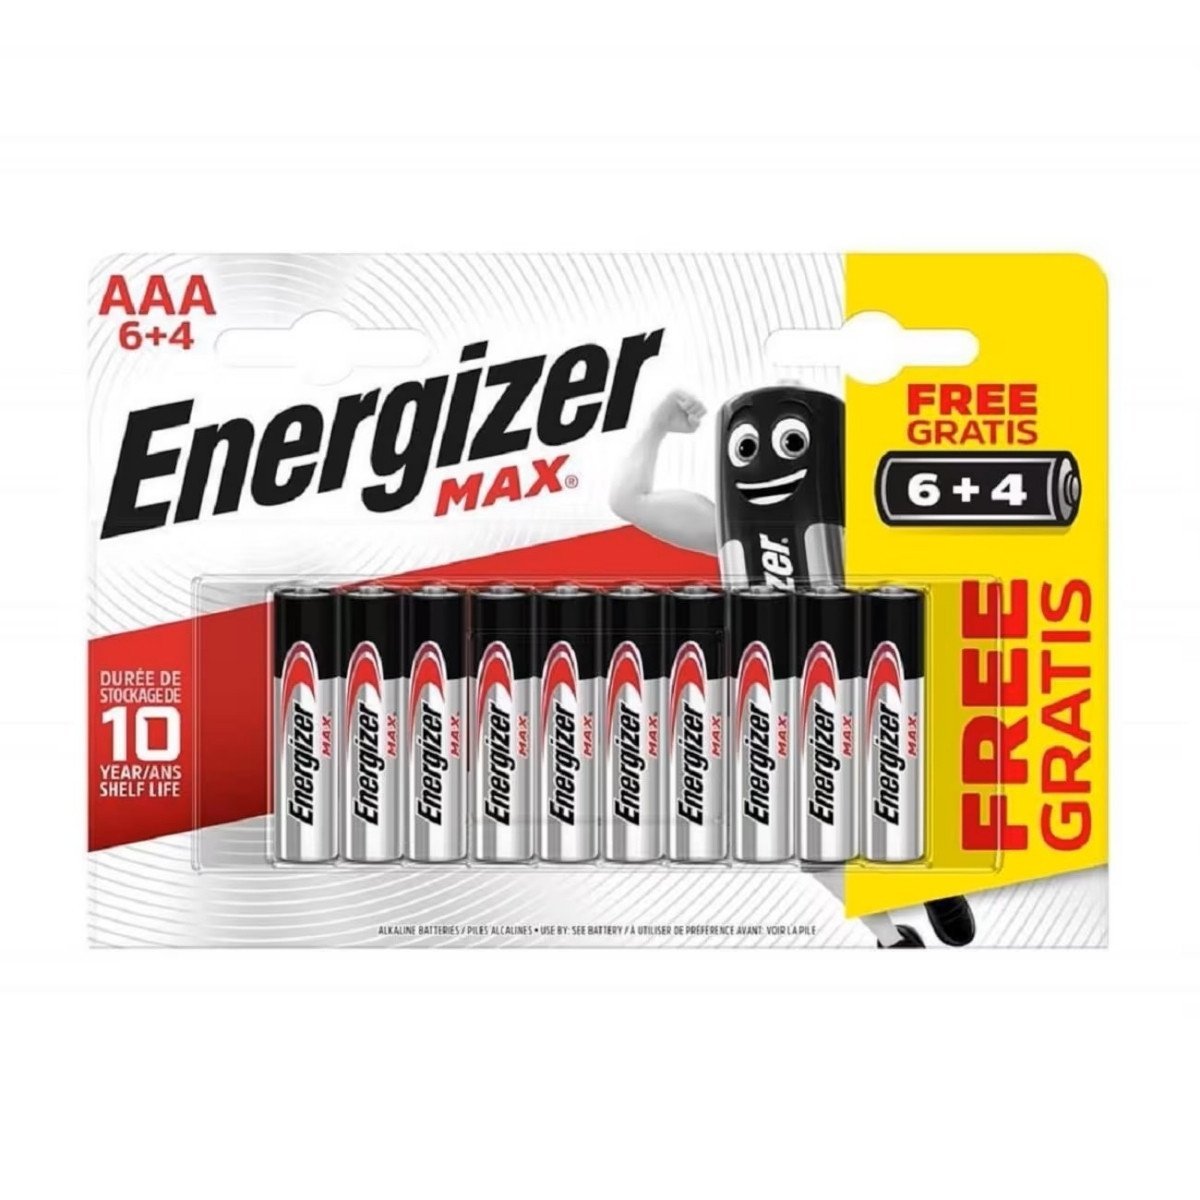 Energizer Max AAA İnce Kalem Pil 6+4